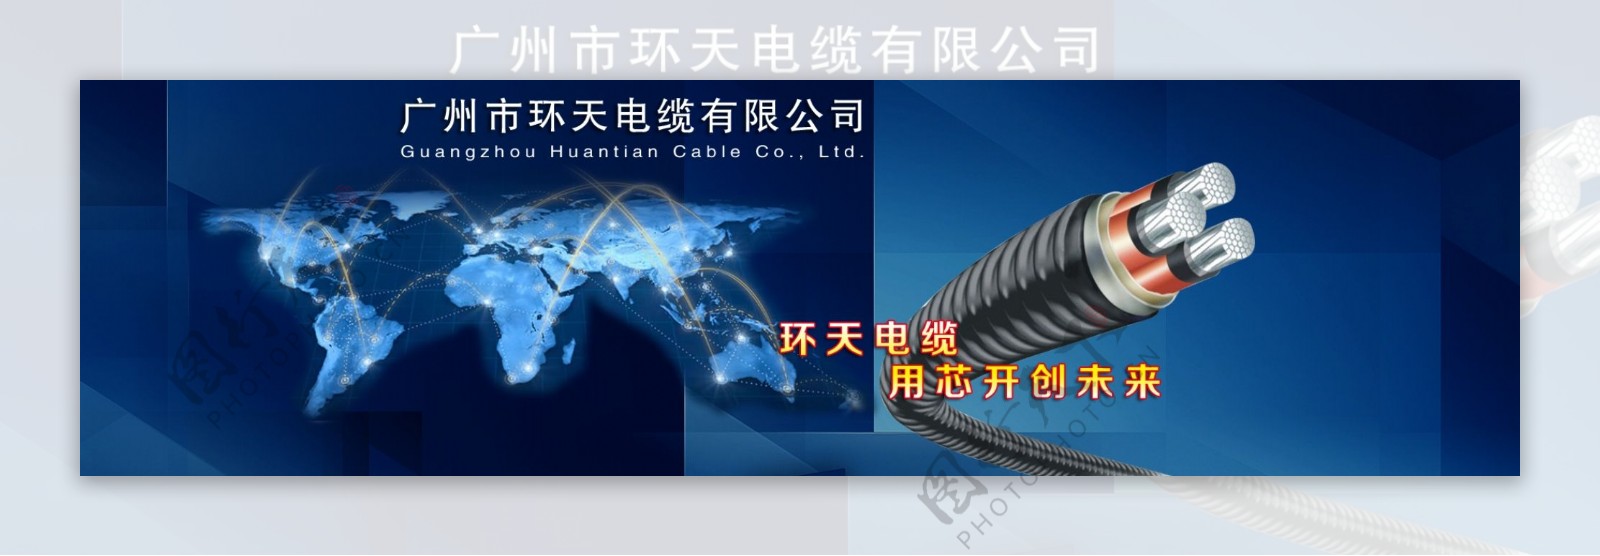 网站banner广告电线电缆